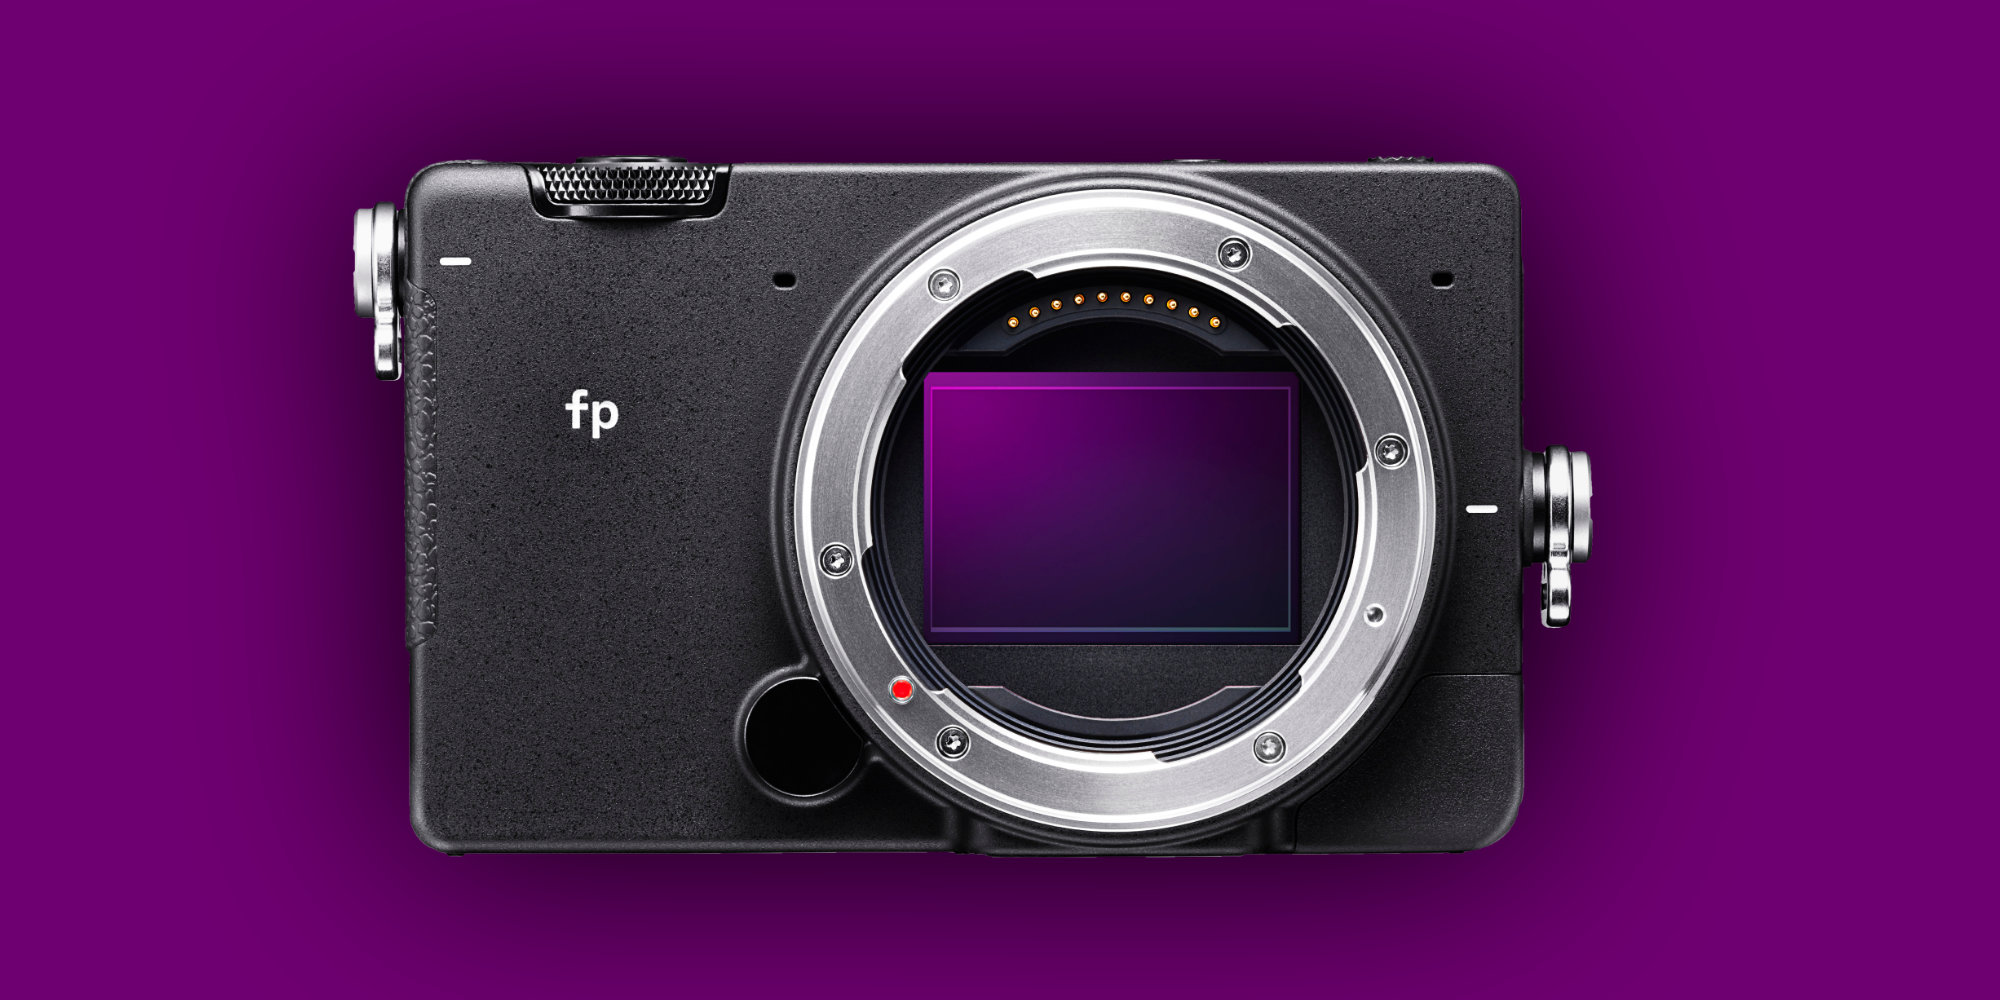 lightest frame mirrorless camera